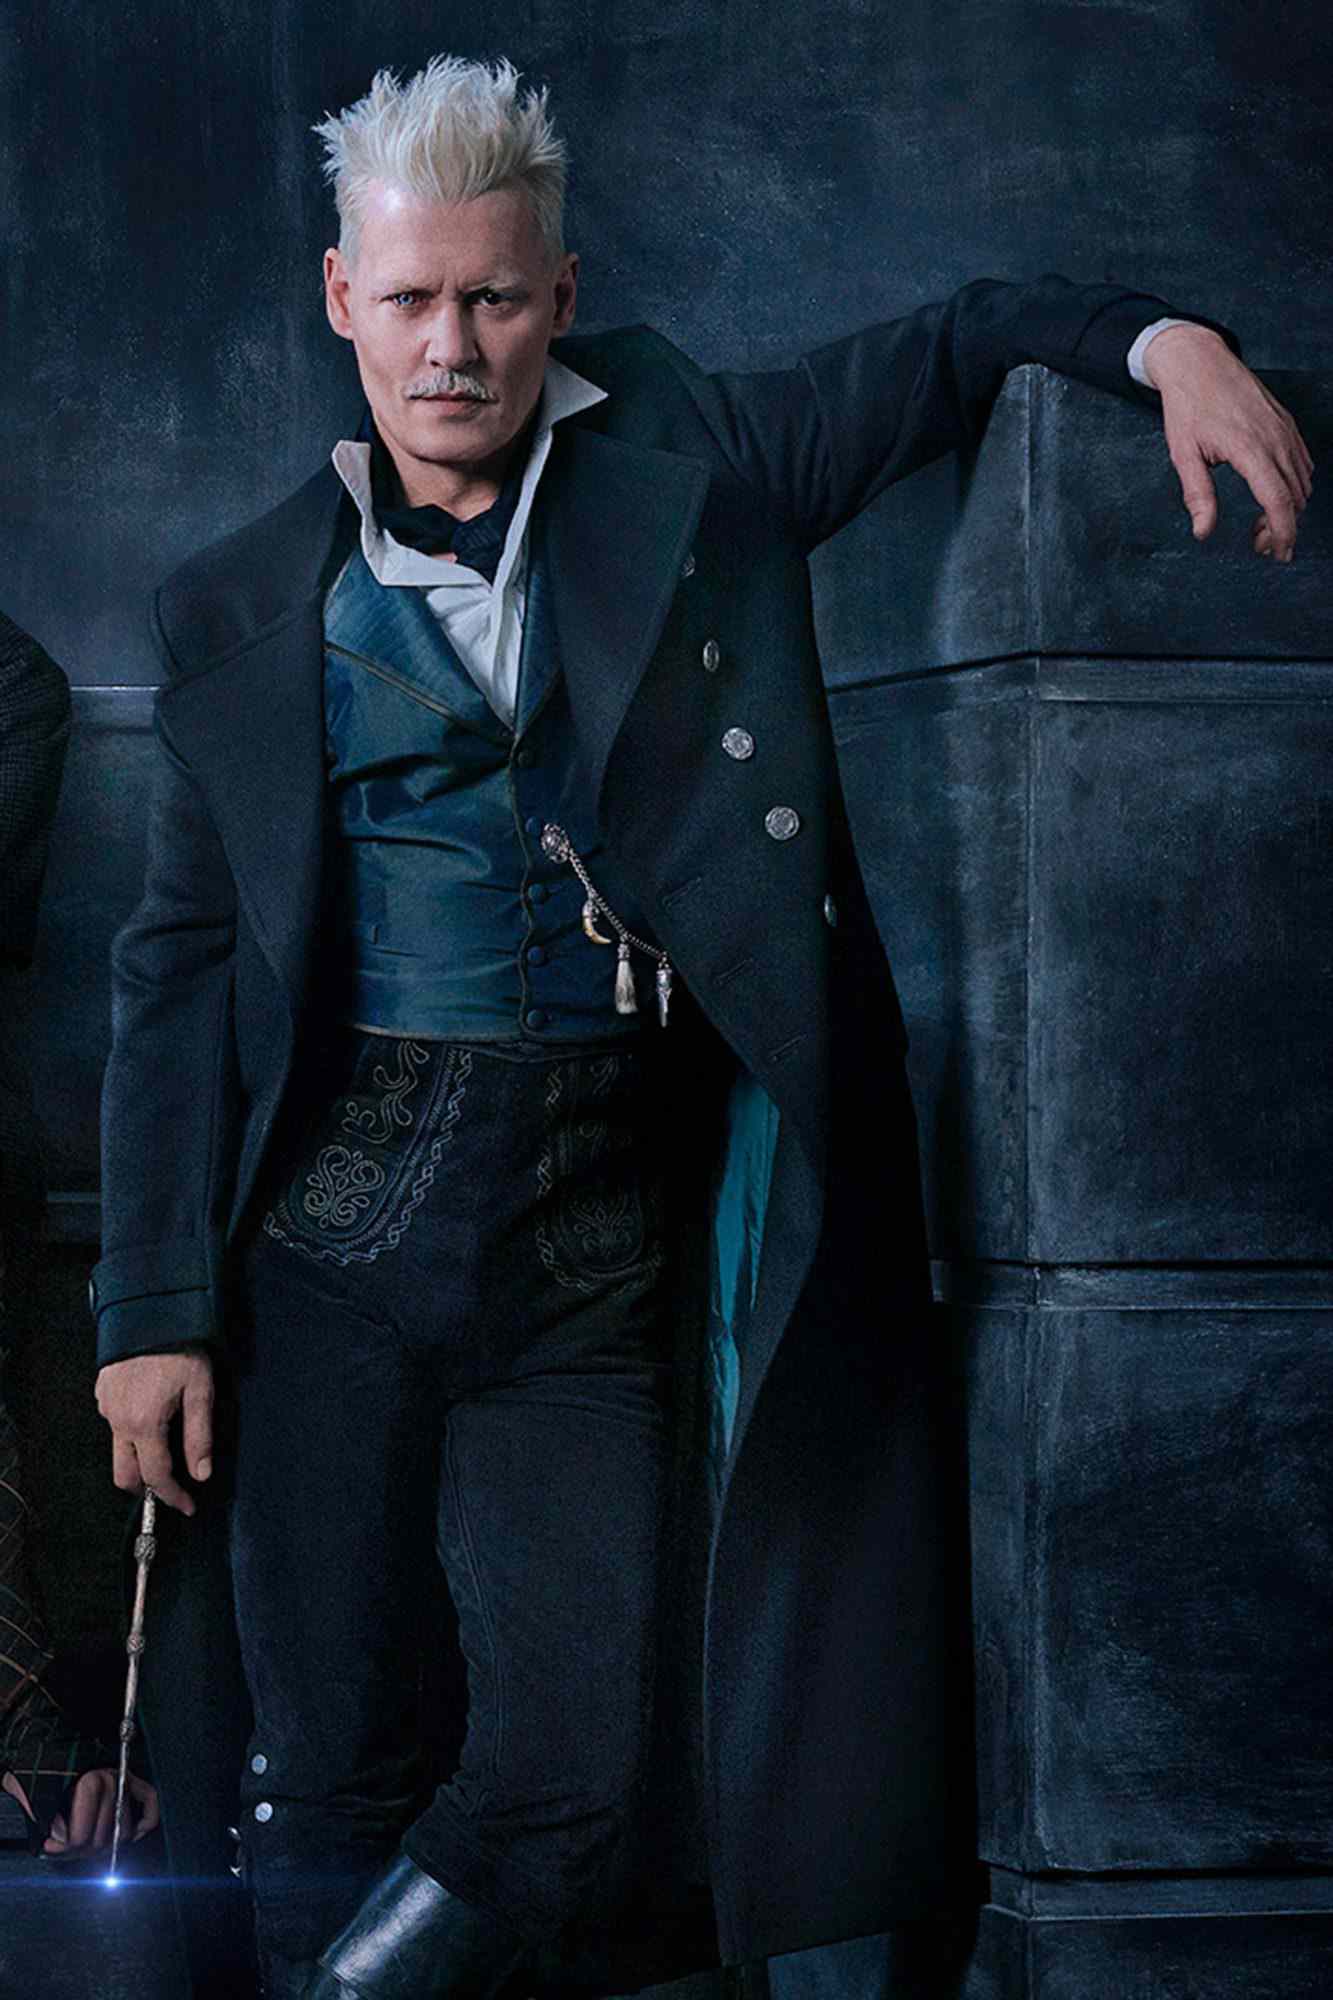 Johnny Depp as Gellert Grindelwald